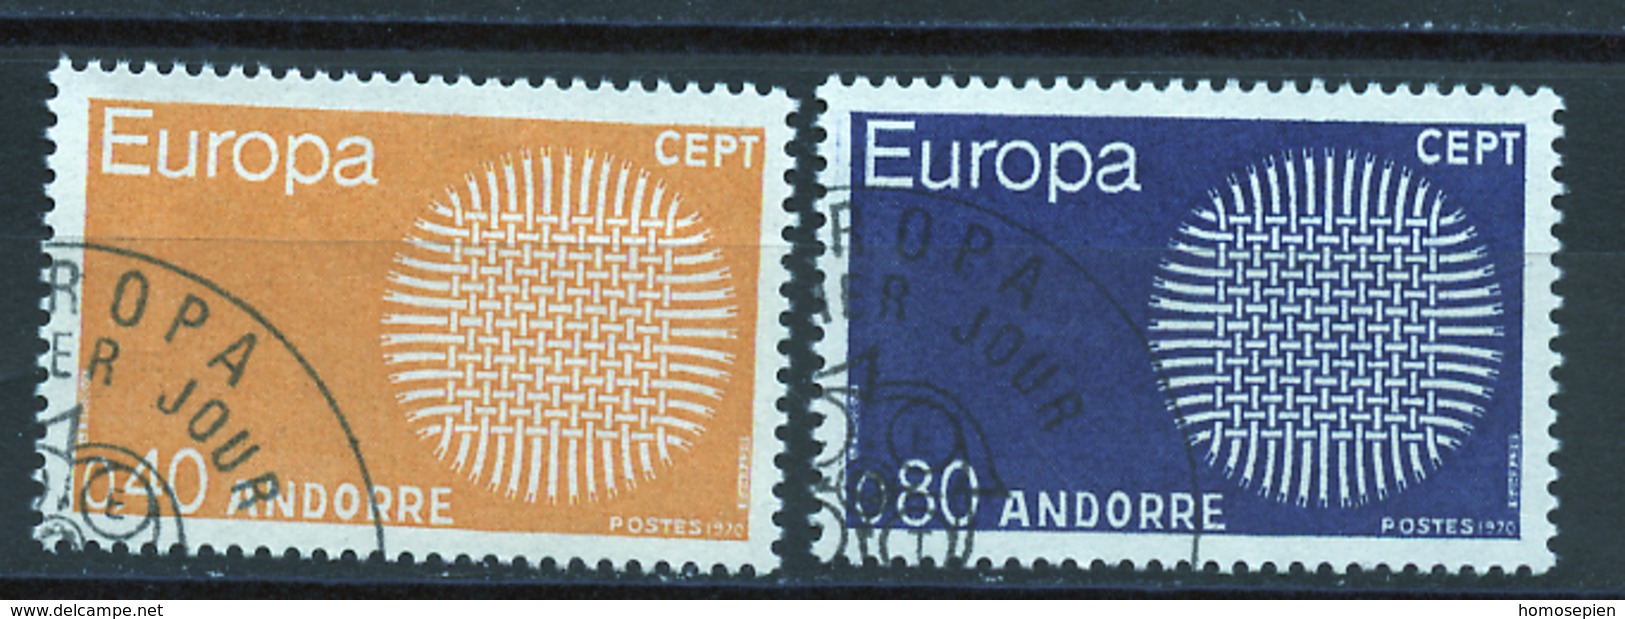 Andorre Français - Andorra 1970 Y&T N°202 à 203 - Michel N°222 à 223 (o) - EUROPA - Usati